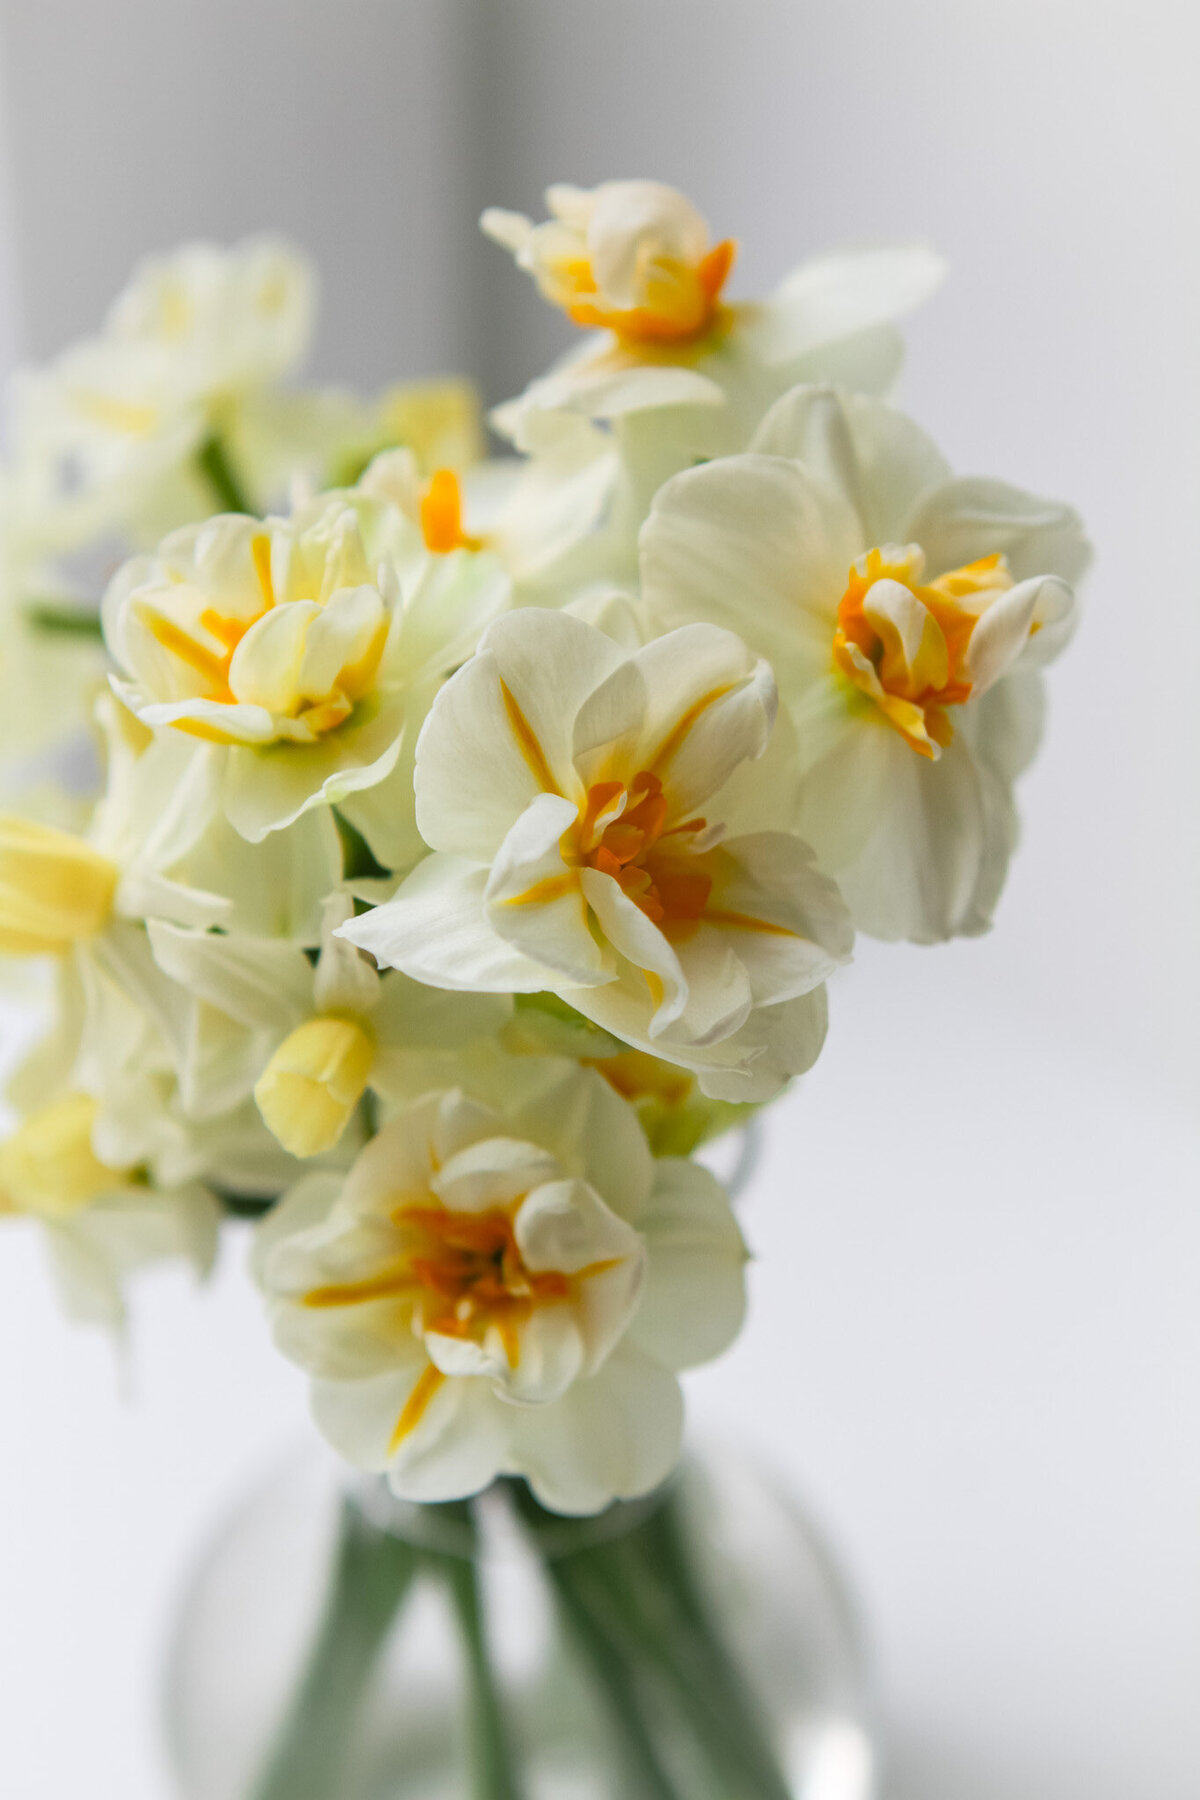 daffodils-garden-flowers-white